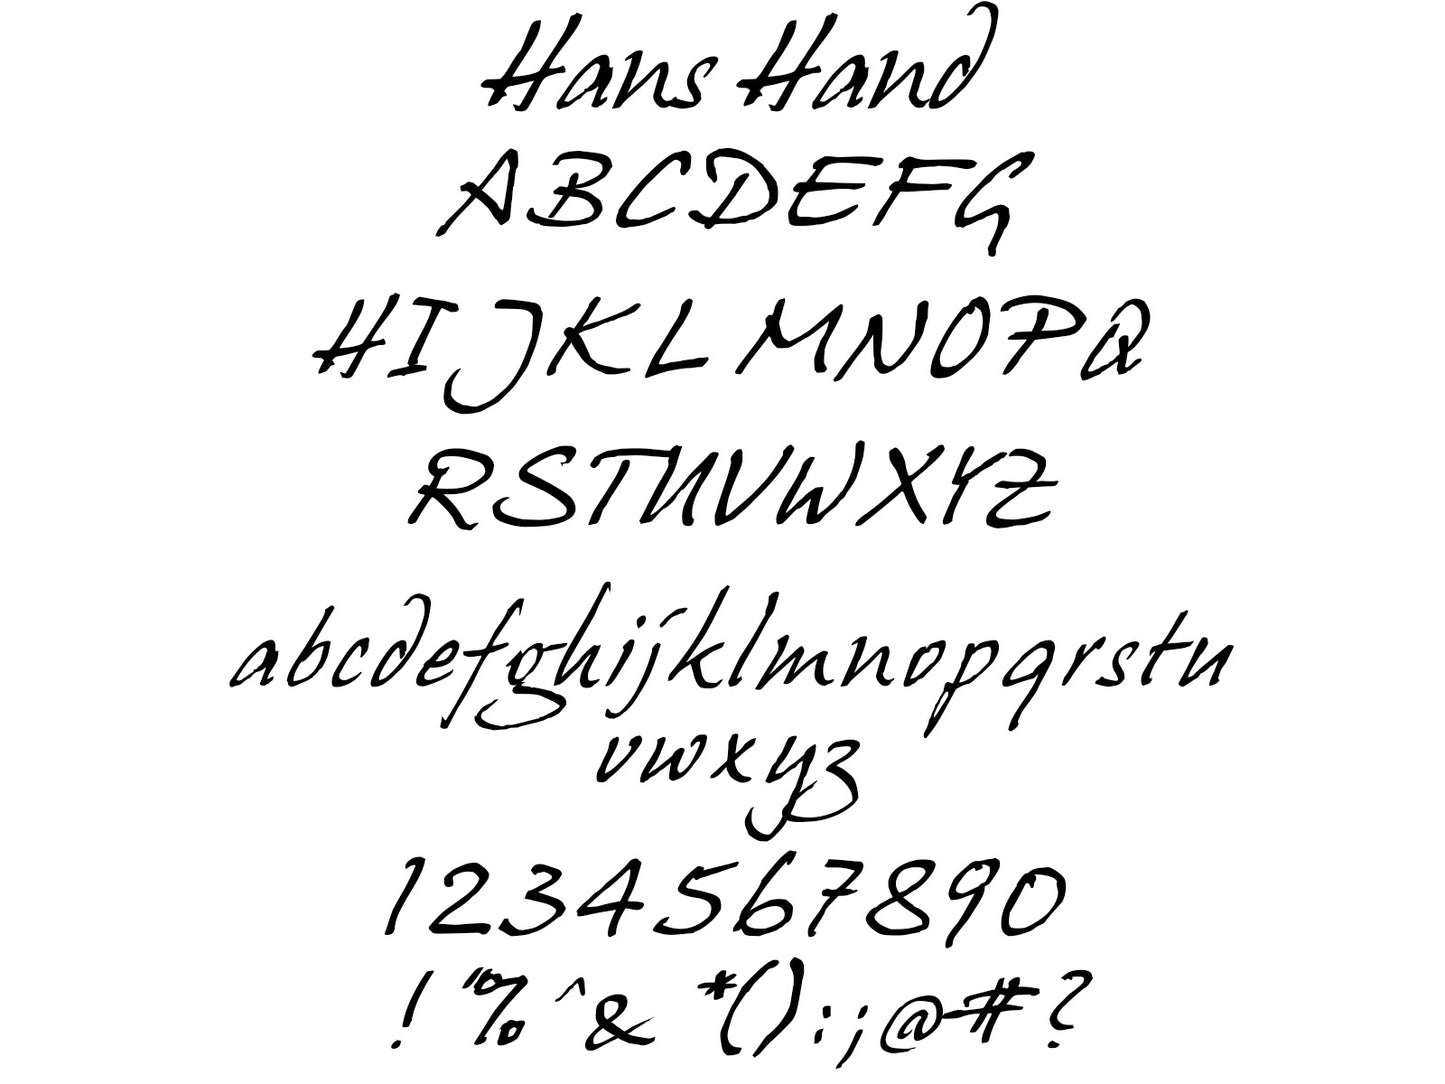 Custom Signature Guitar Decal in Hans Hand Font